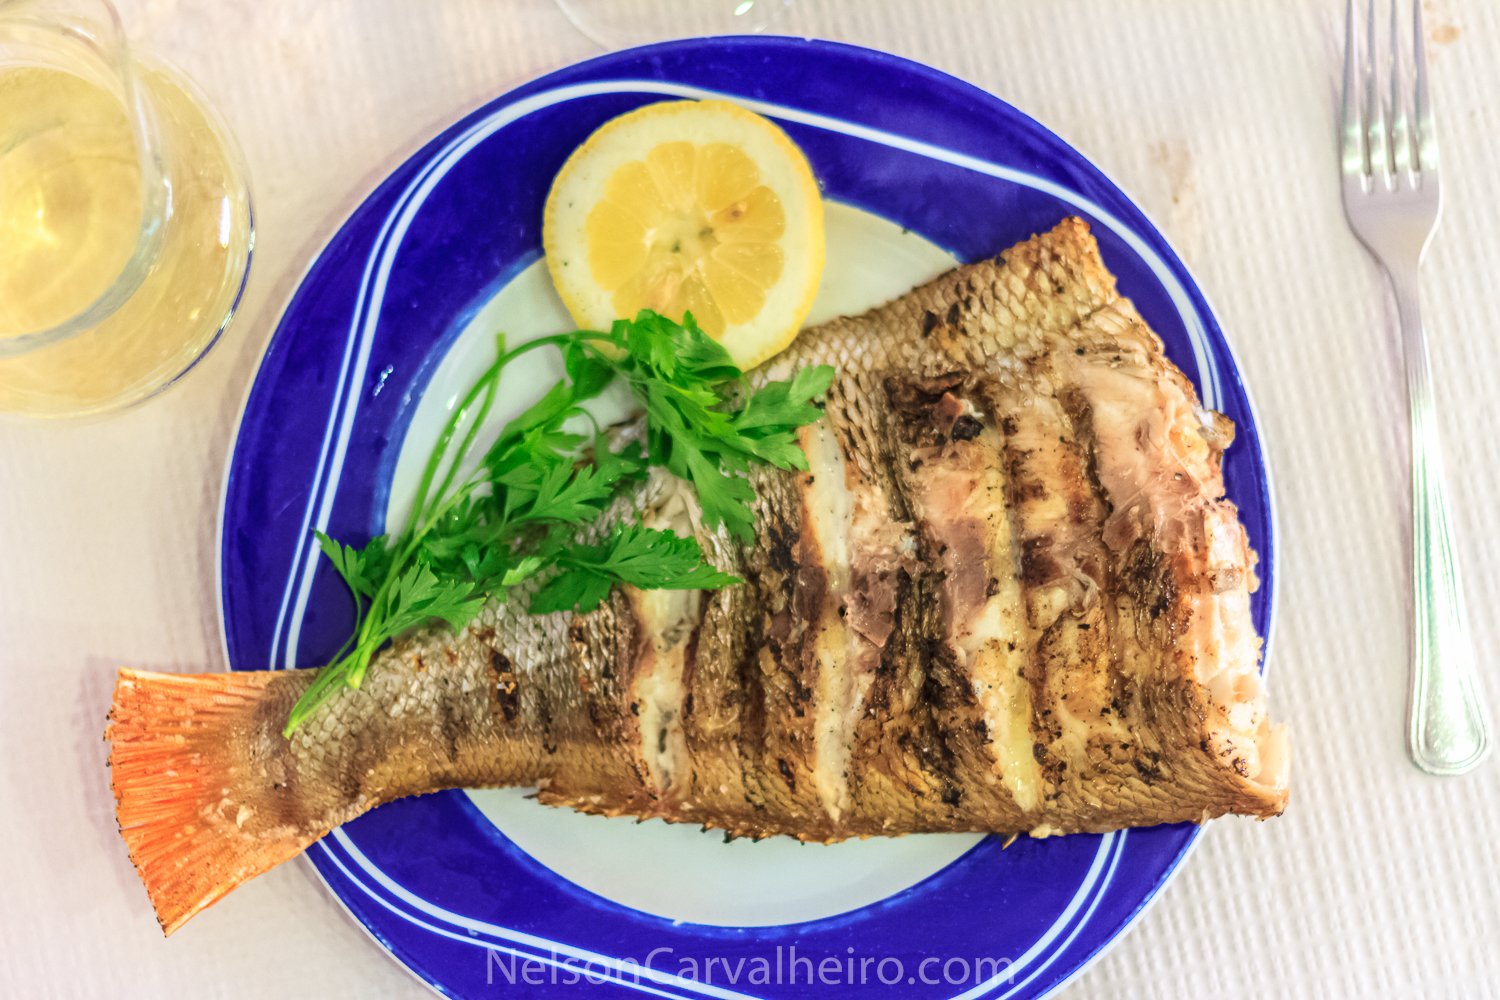 Nelson_Carvalheiro_Portugal_Food_Travel-1